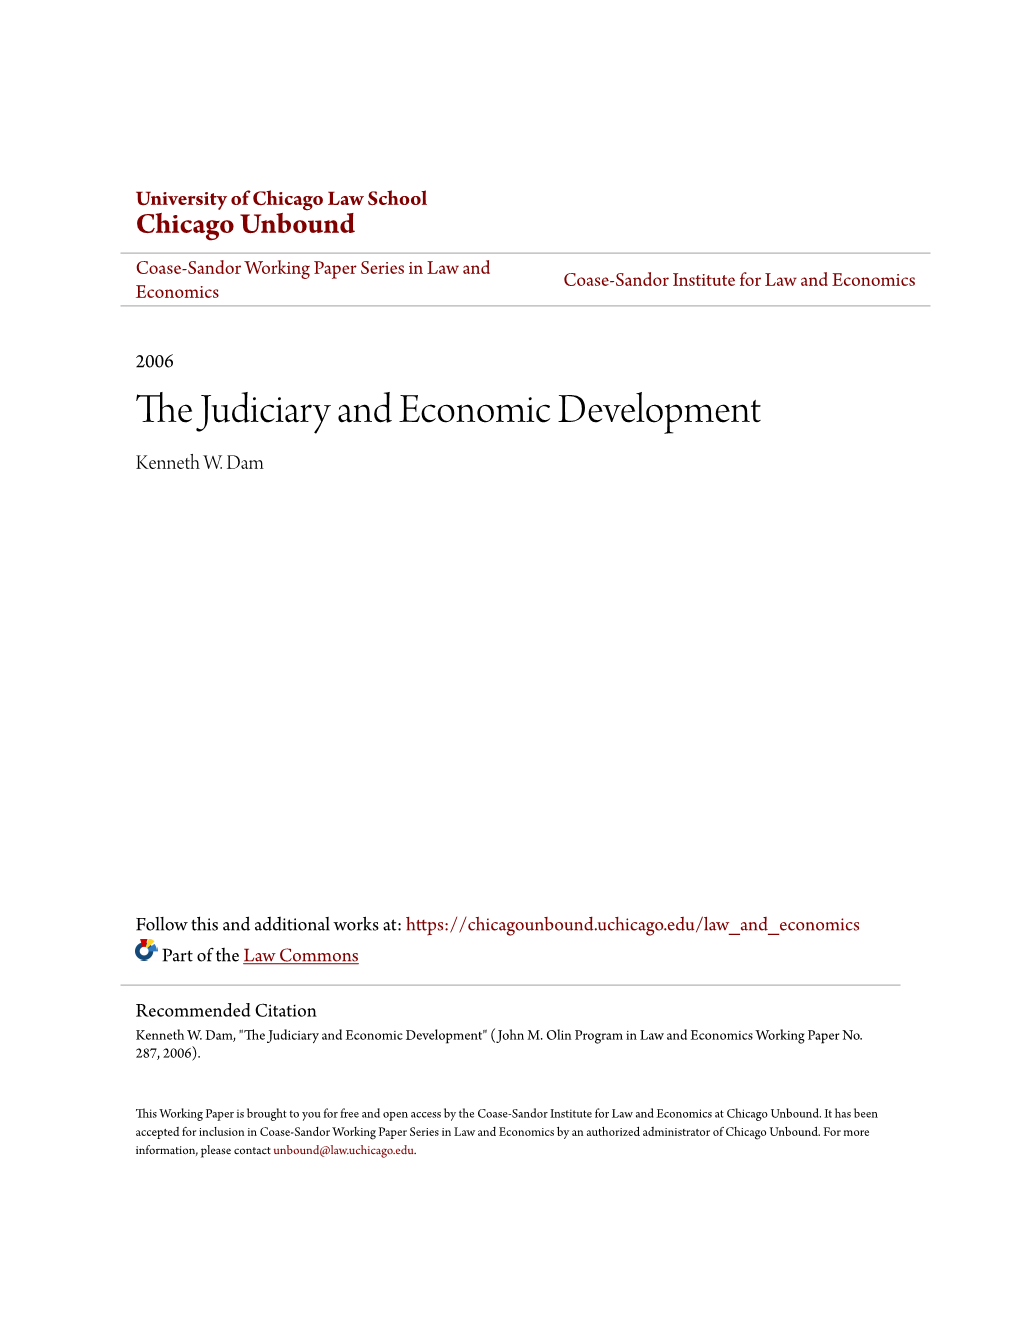 The Judiciary and Economic Development